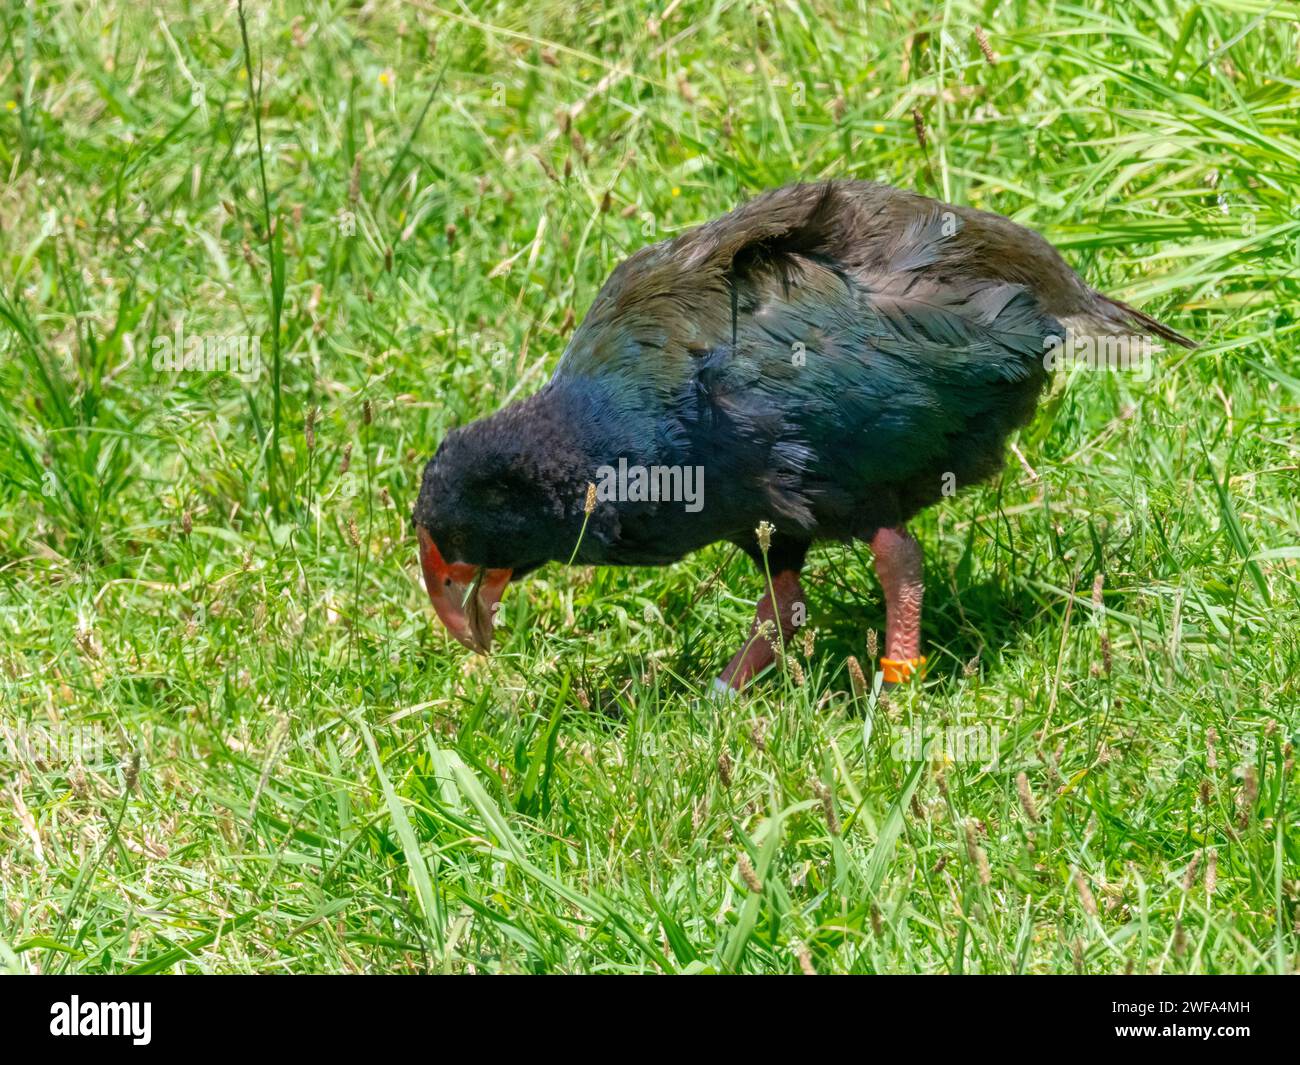 South Island Takahe, Porphyrio hochstetteri, an endemic flightless bird found in New Zealand Stock Photo